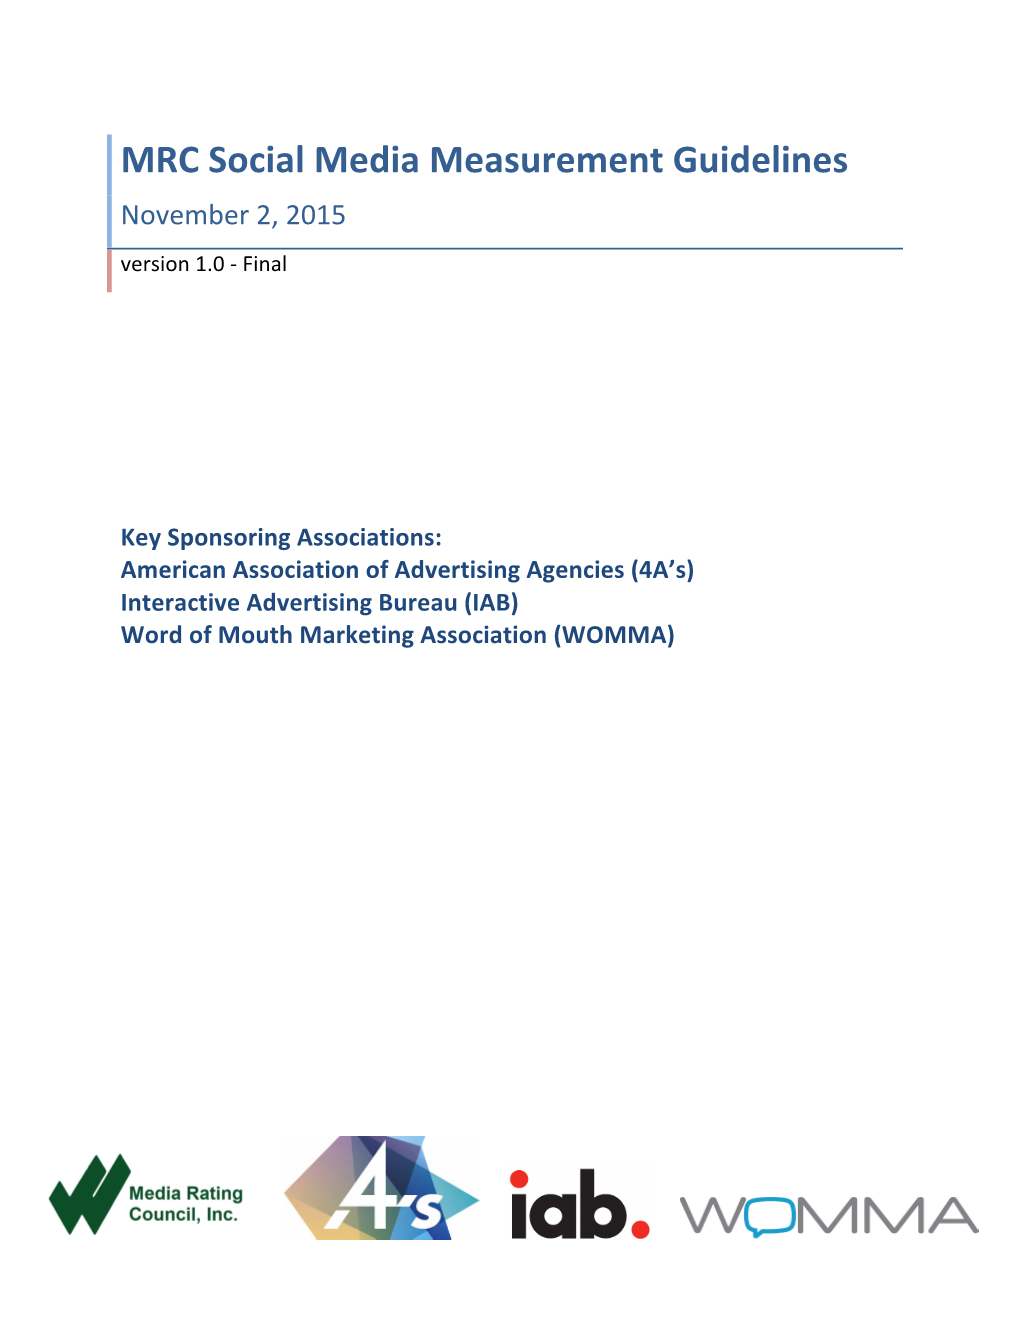 MRC Social Media Measurement Guidelines November 2, 2015 Version 1.0 - Final